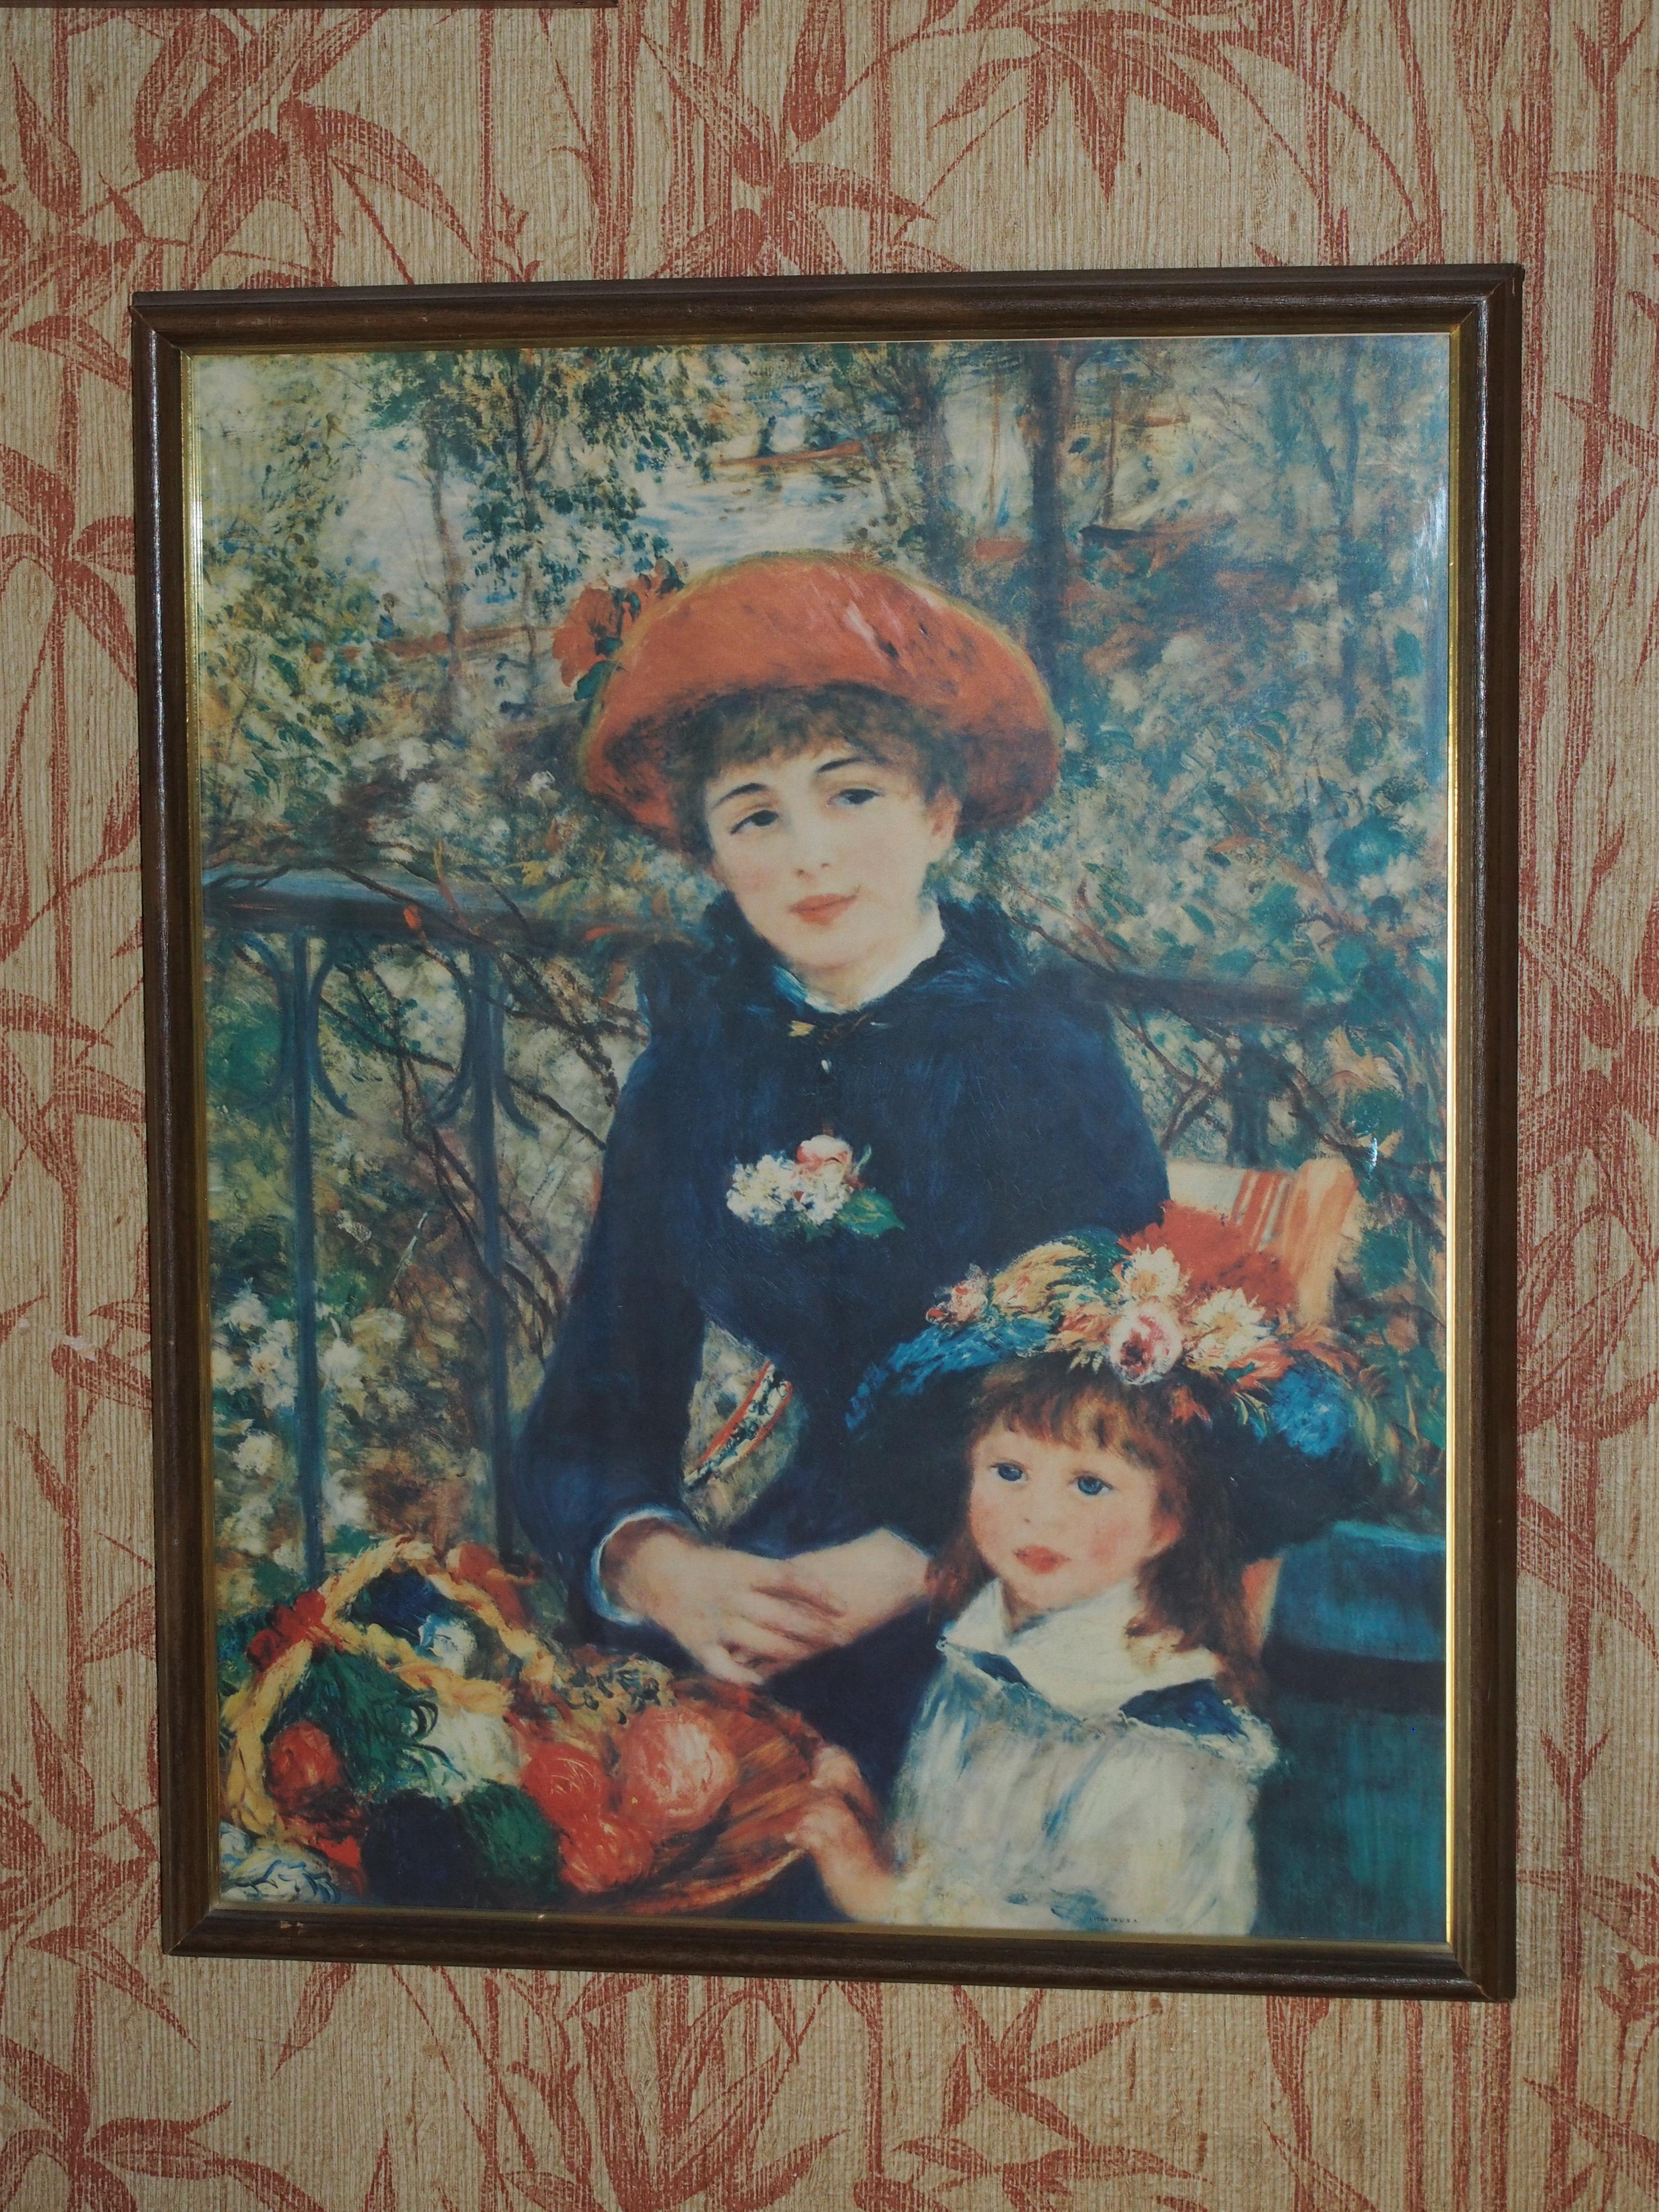 A. Renoir "On the Terrace" lithogram - framed